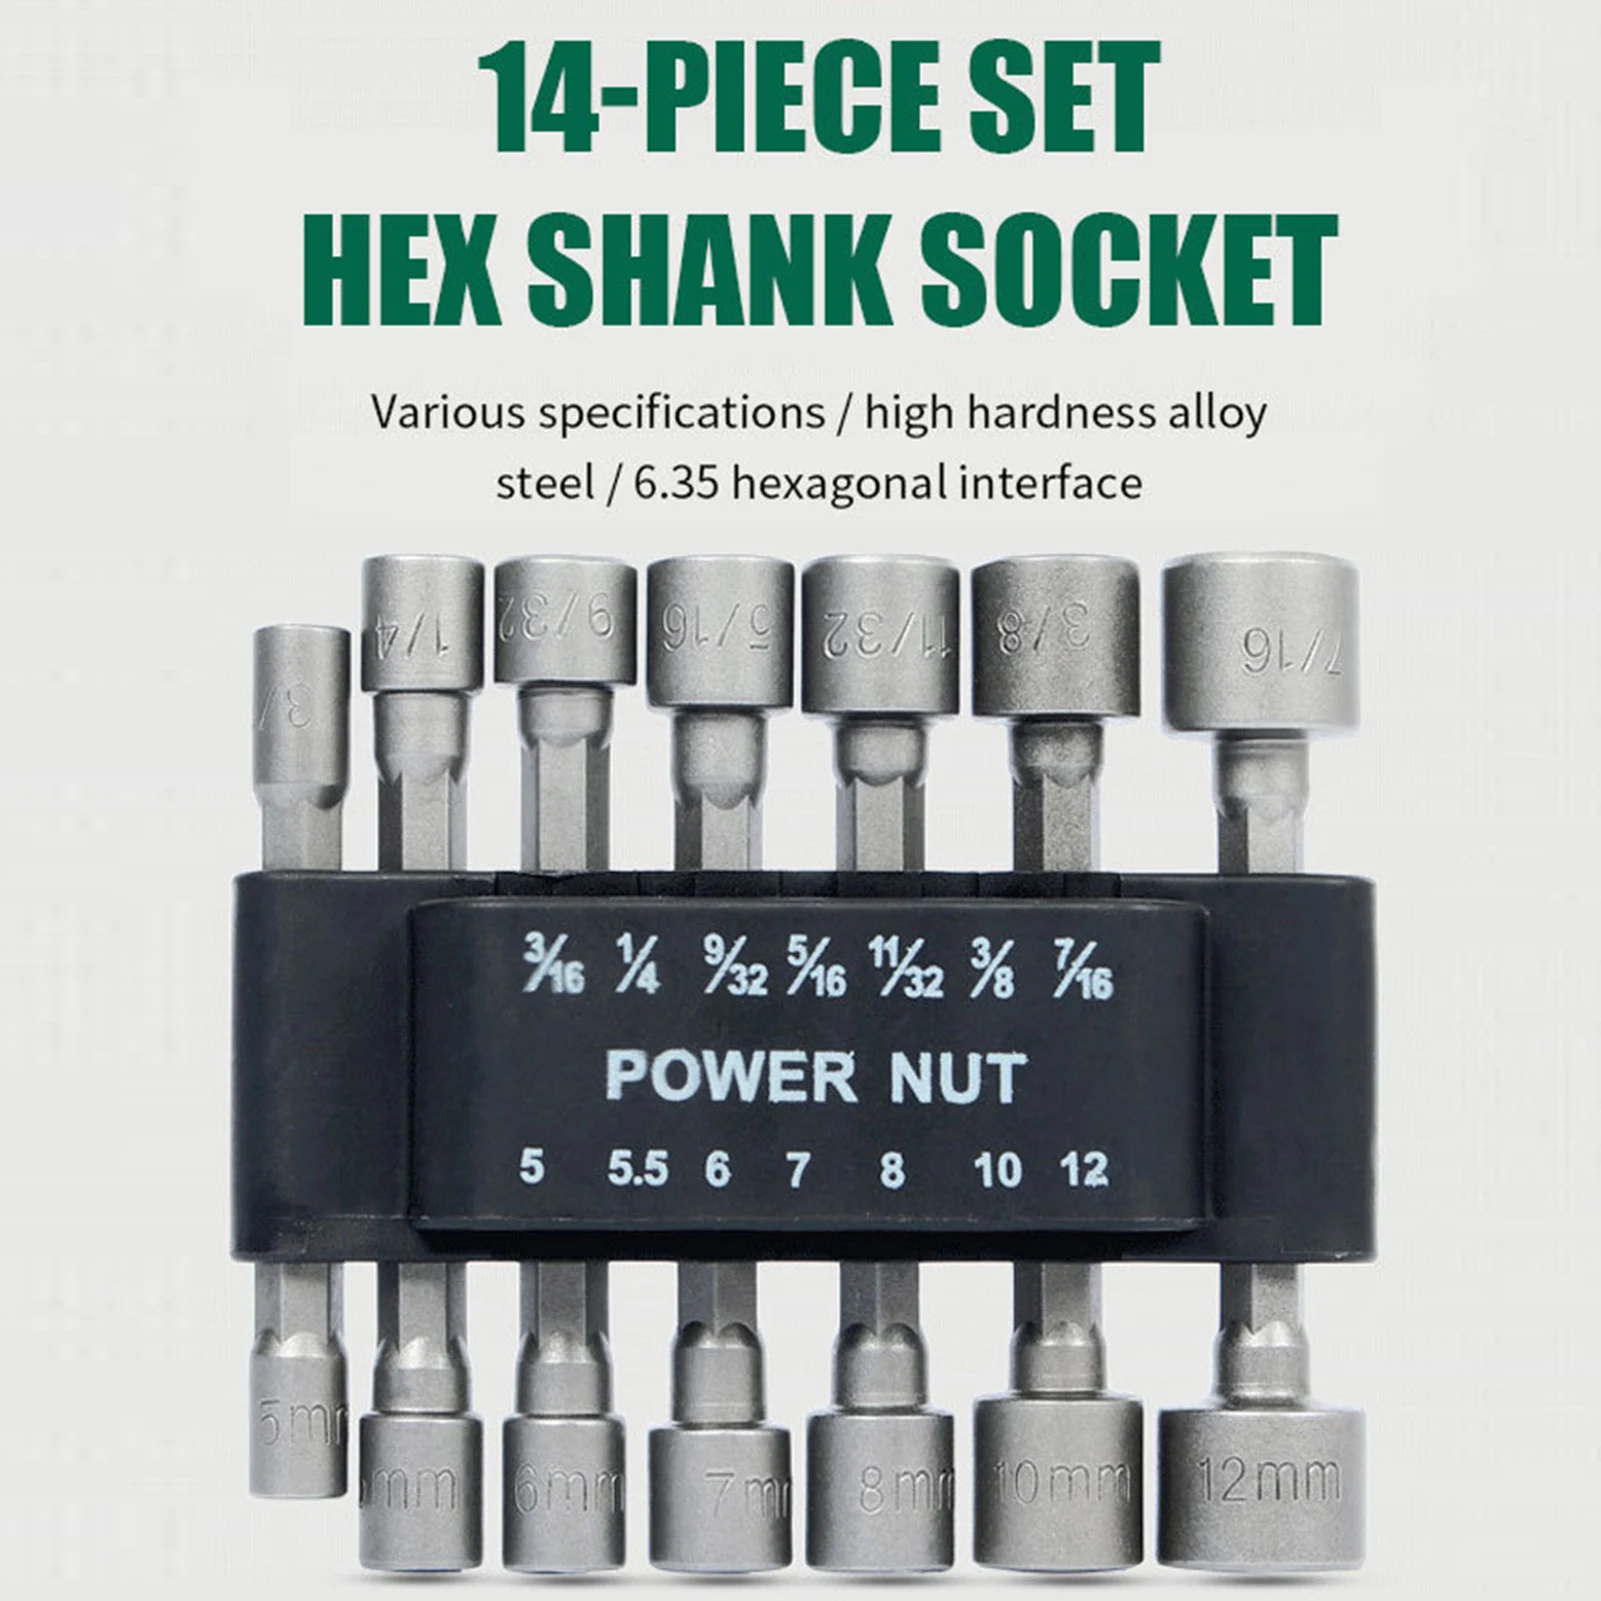 

9/14pcs 5 To 13mm Hexagonal Shank Hex Nut Socket 1/4" Screw Metric Driver Tool Set Adapter Drill Bit Adapter Metric Socket